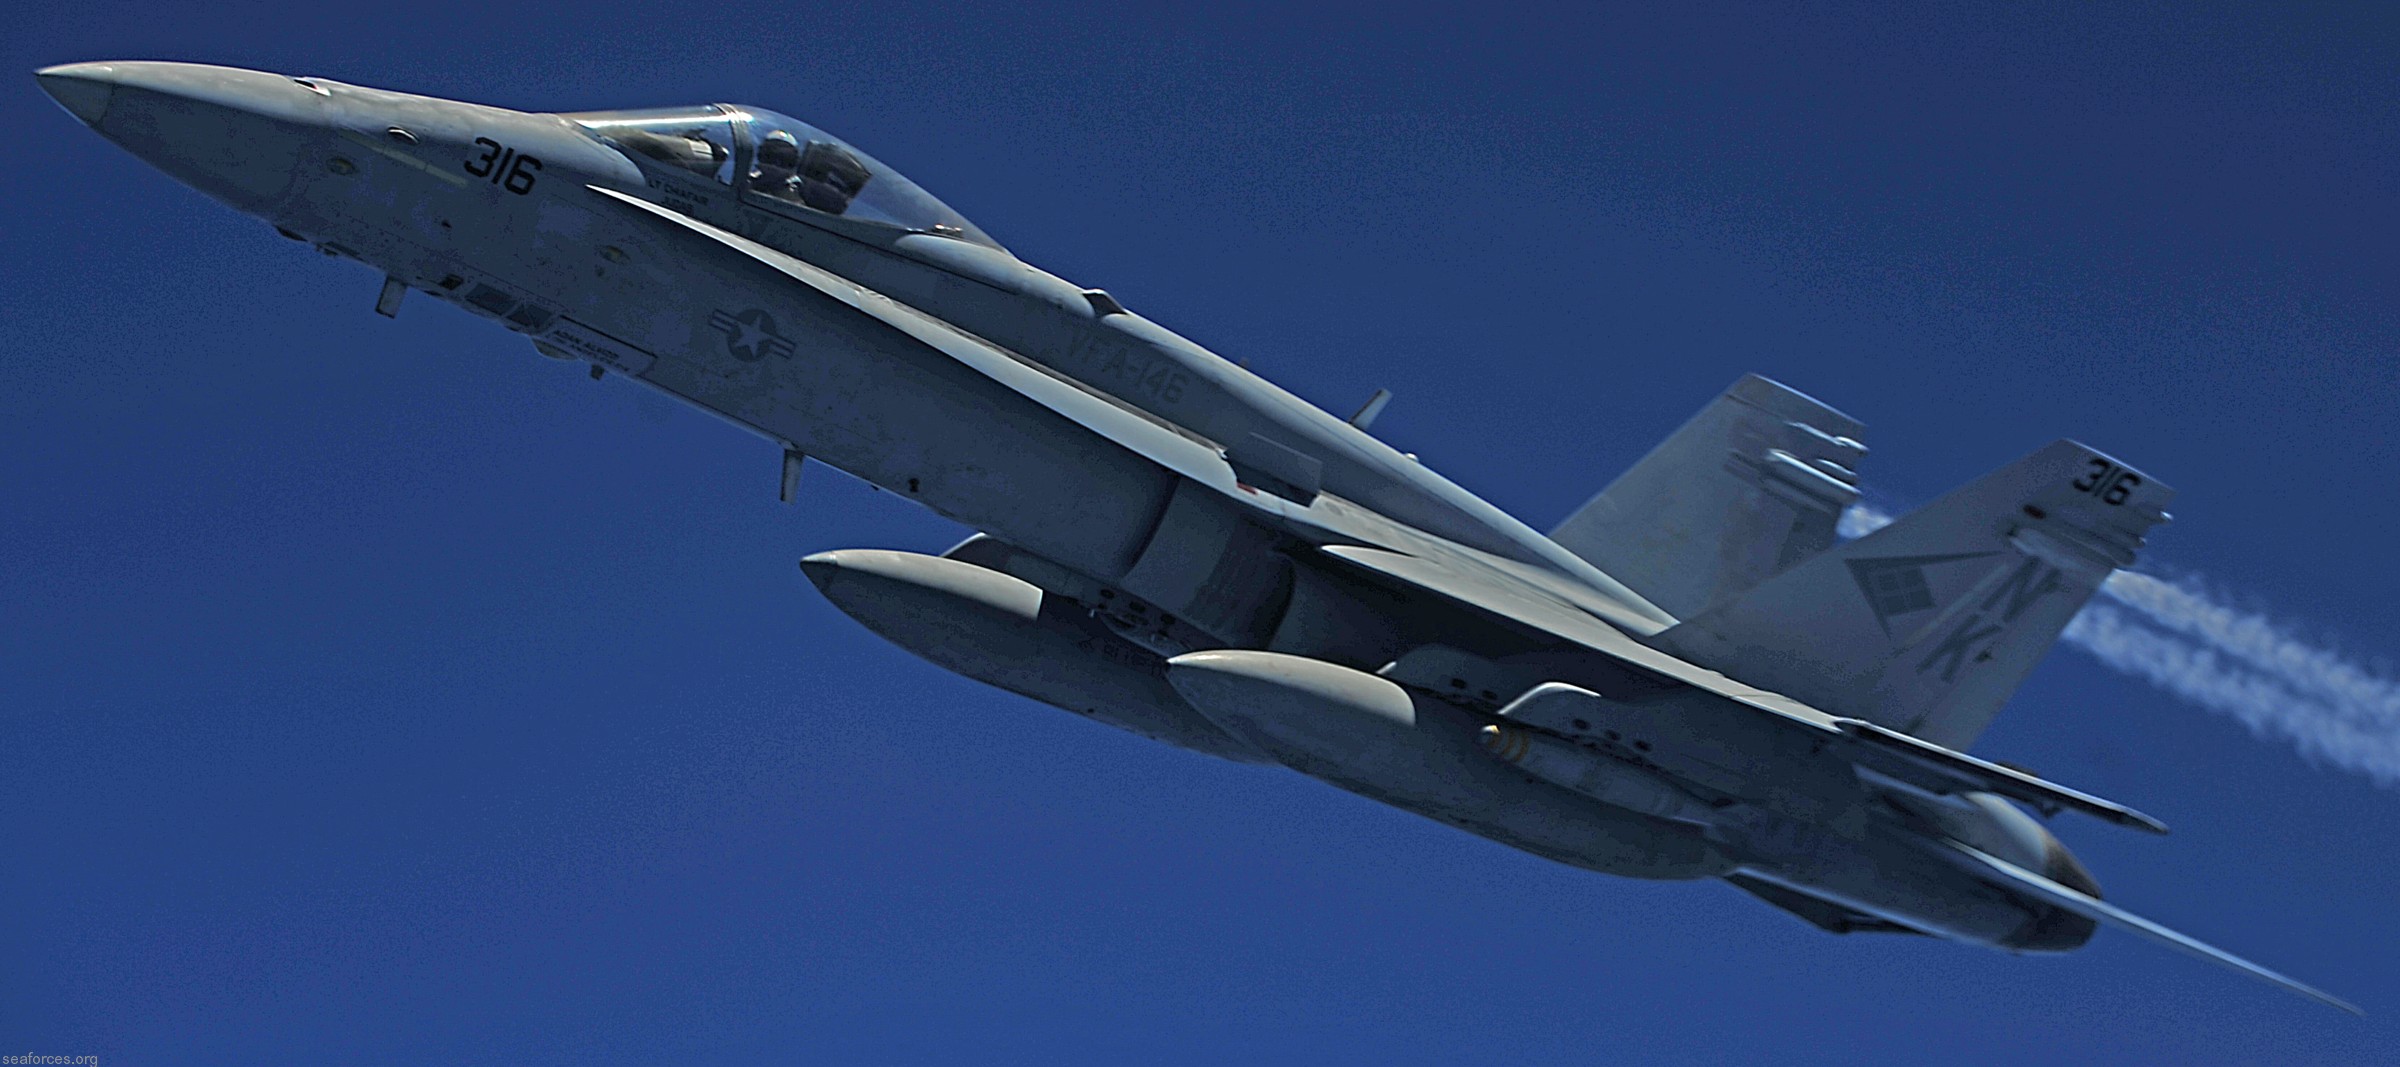 vfa-146 blue diamonds strike fighter squadron f/a-18c hornet carrier air wing cvw-14 uss ronald reagan cvn-76 97